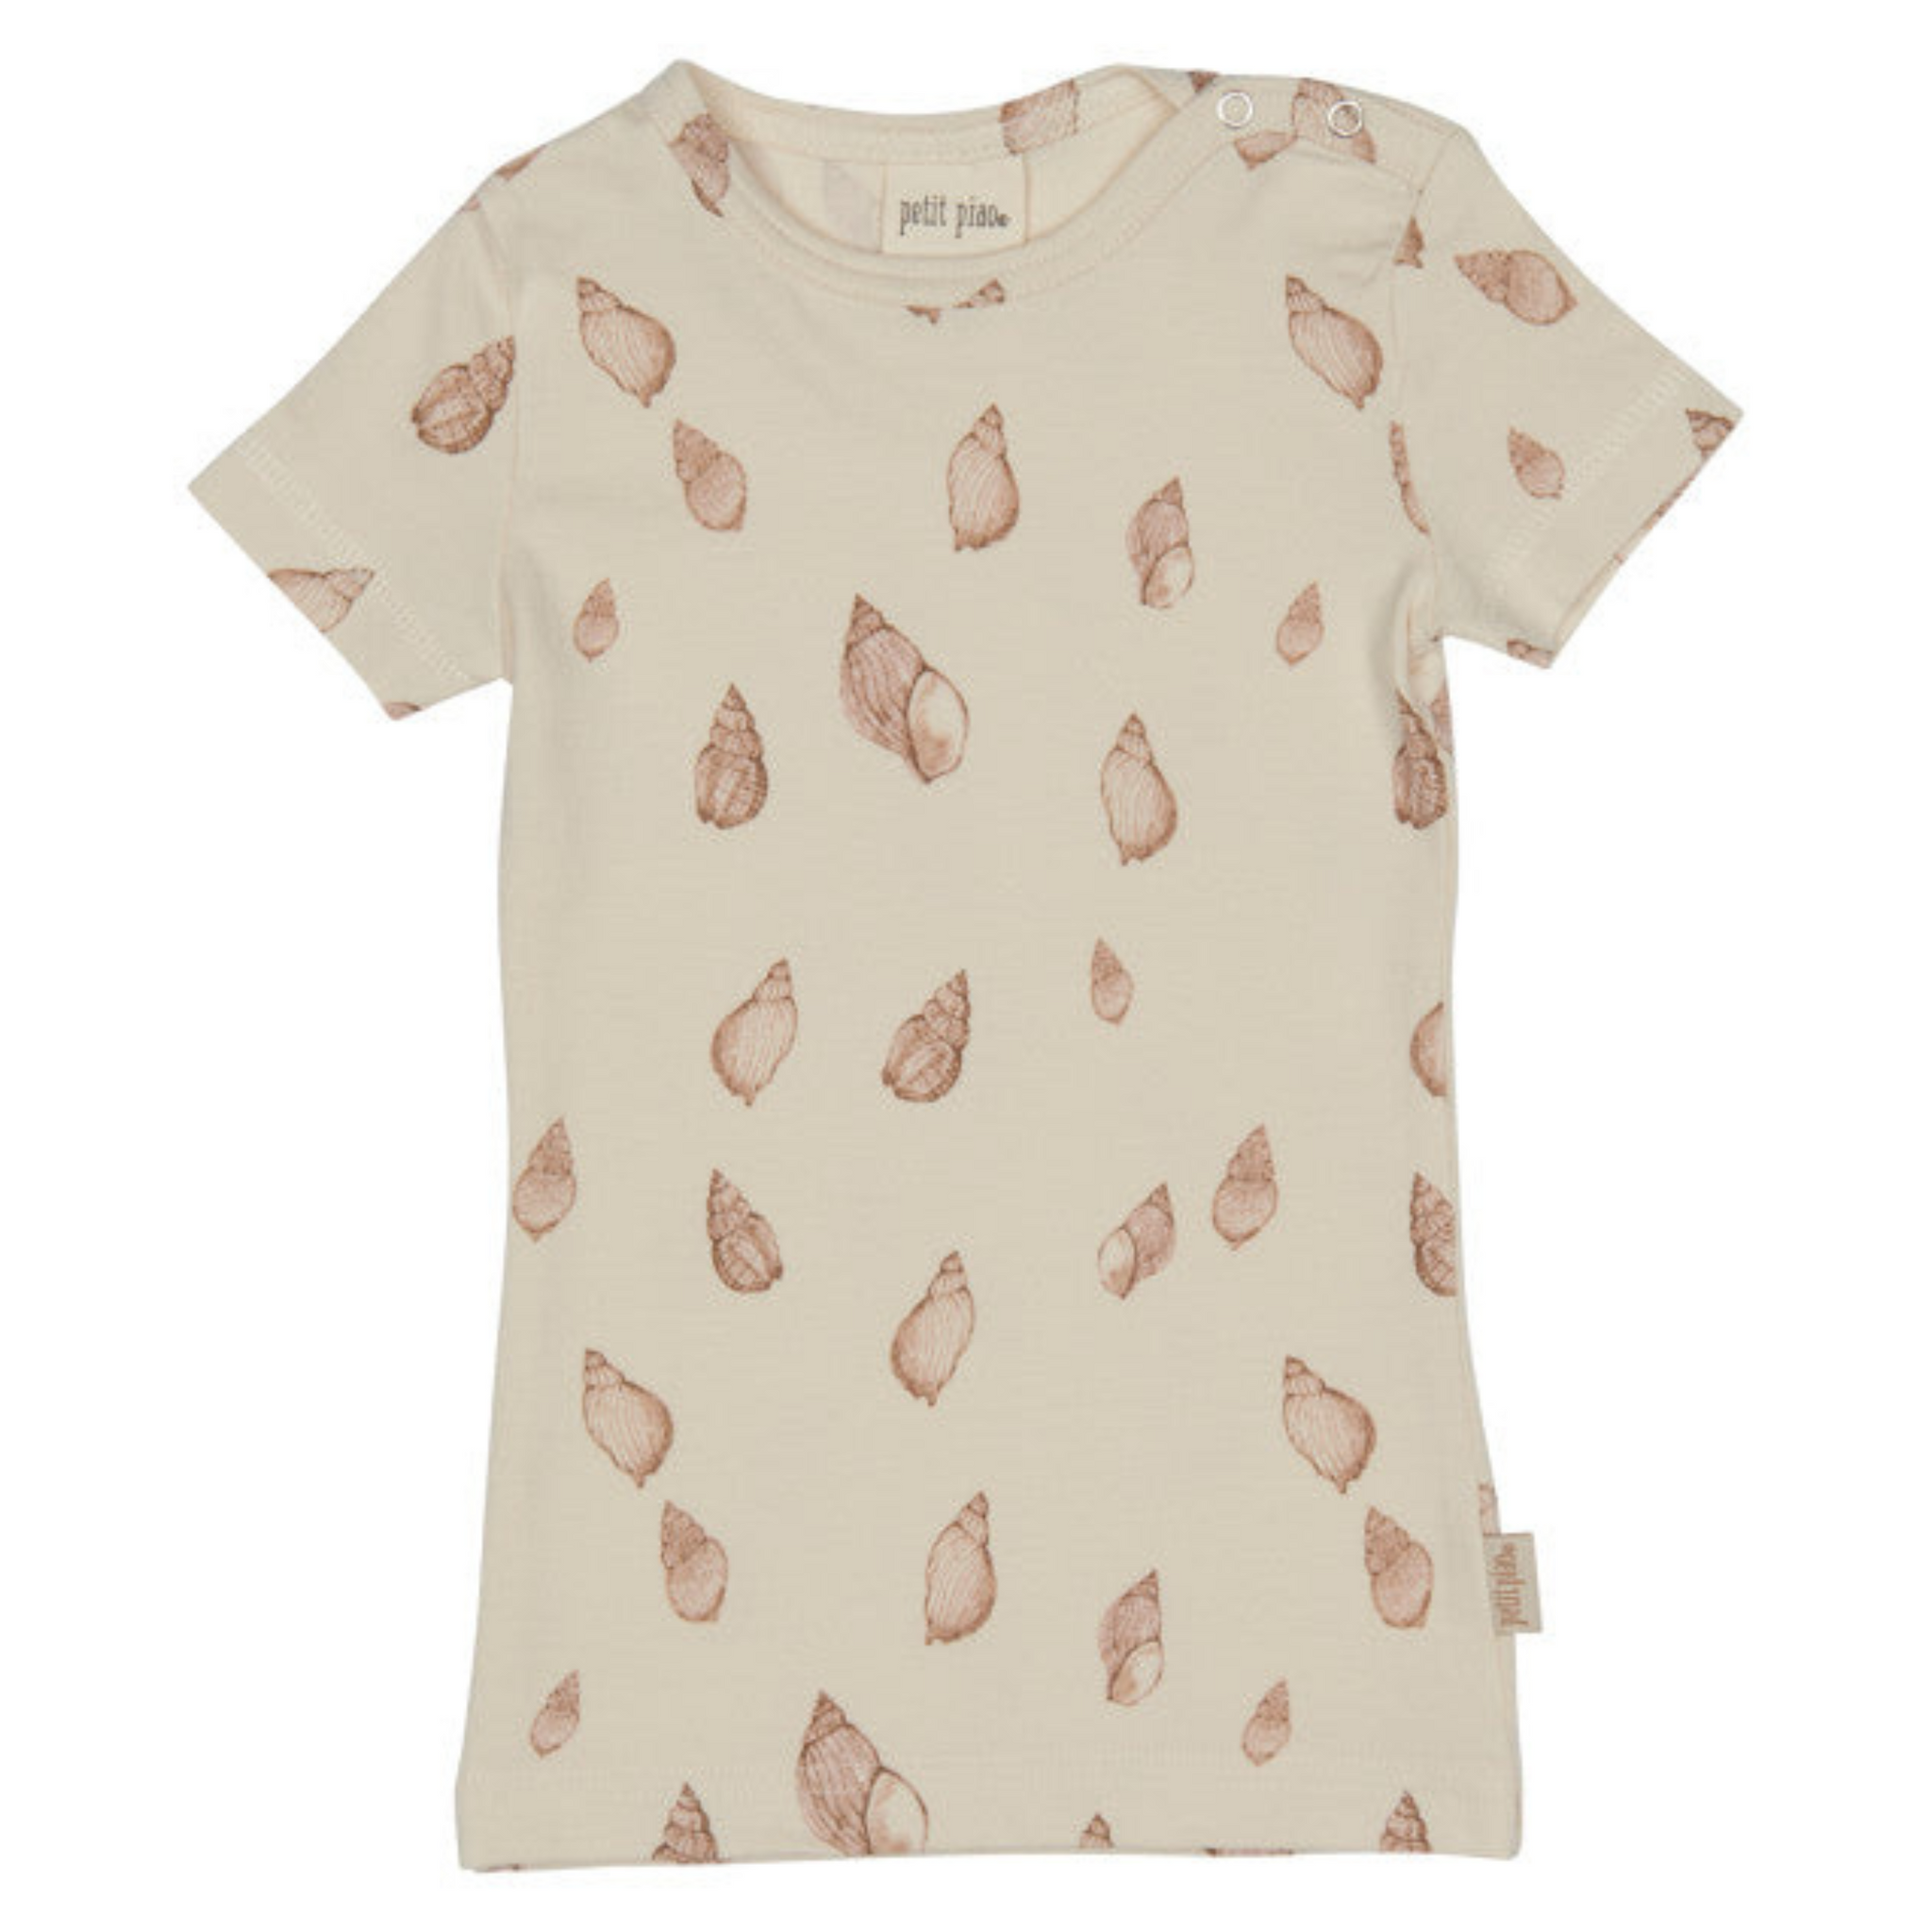 Petit Piao - Printed T-shirt SS - Seashell Print